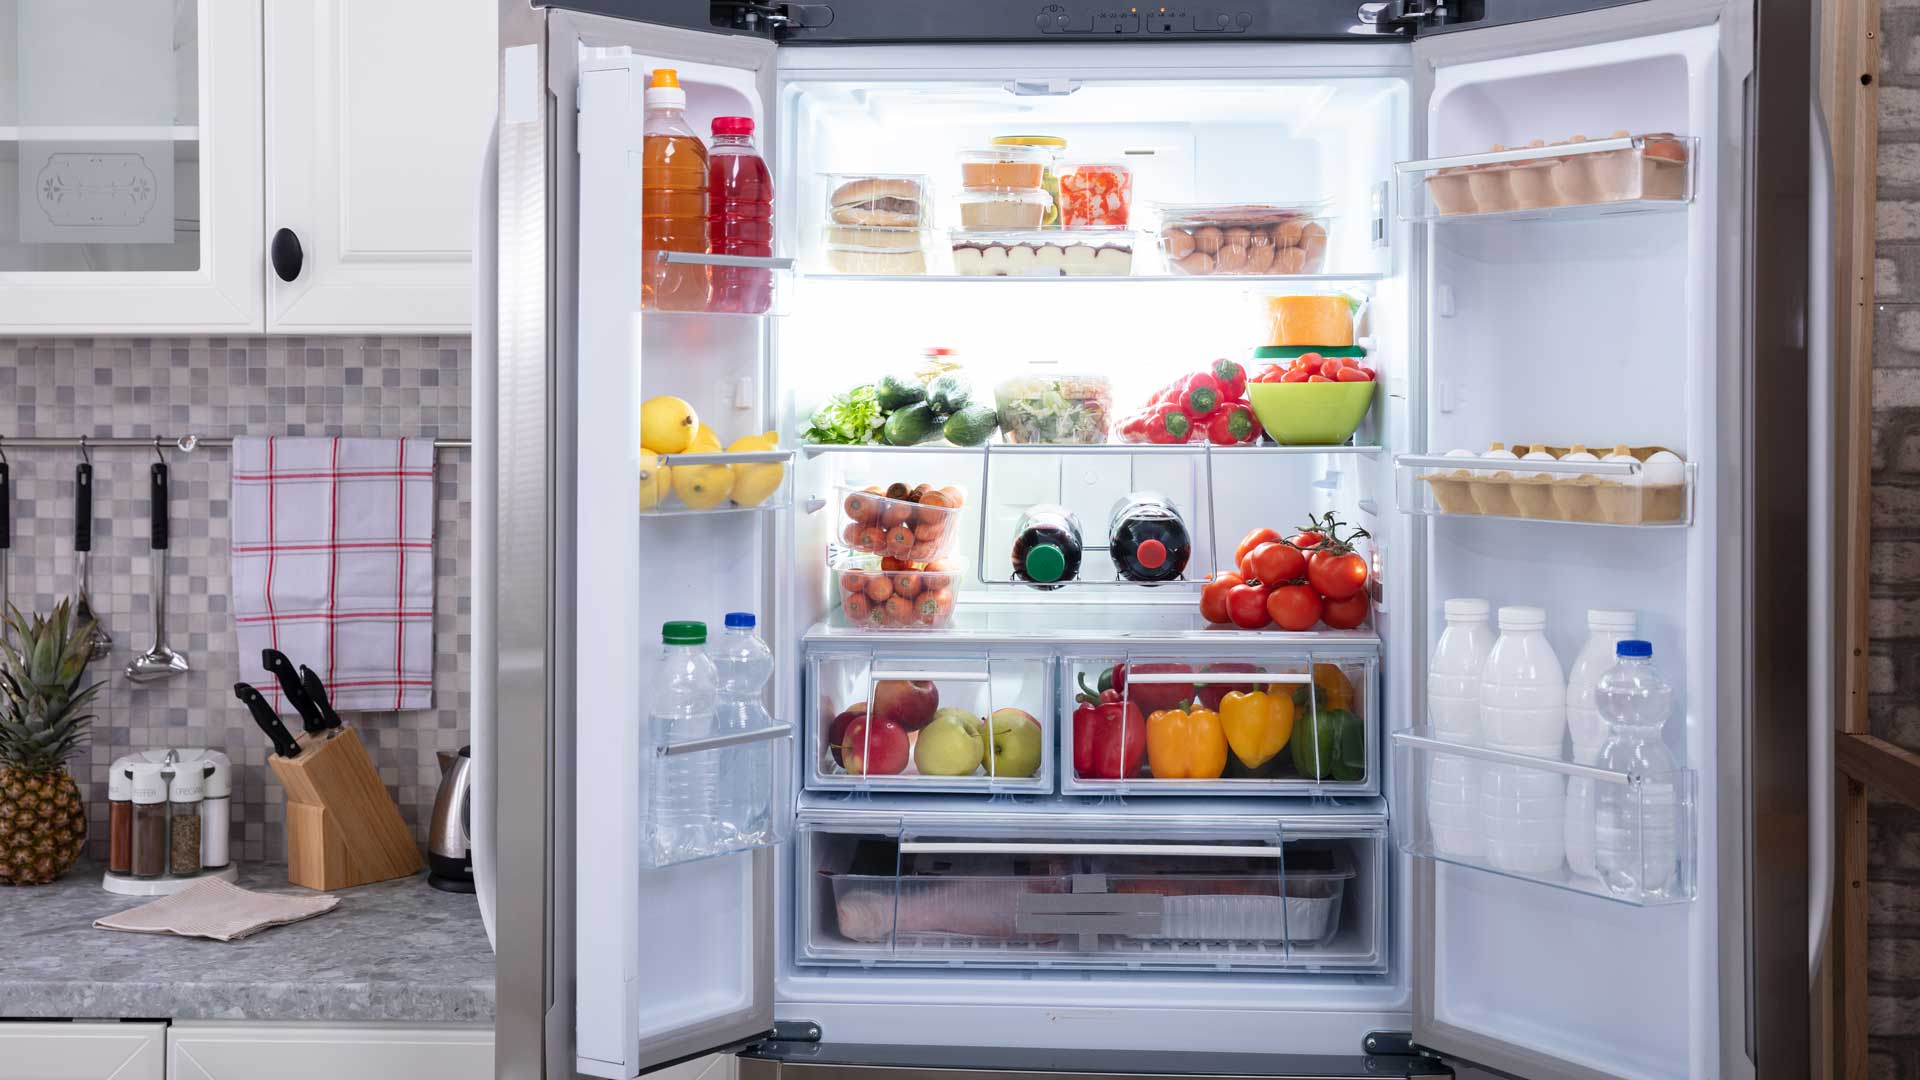 A refrigerator full of produce